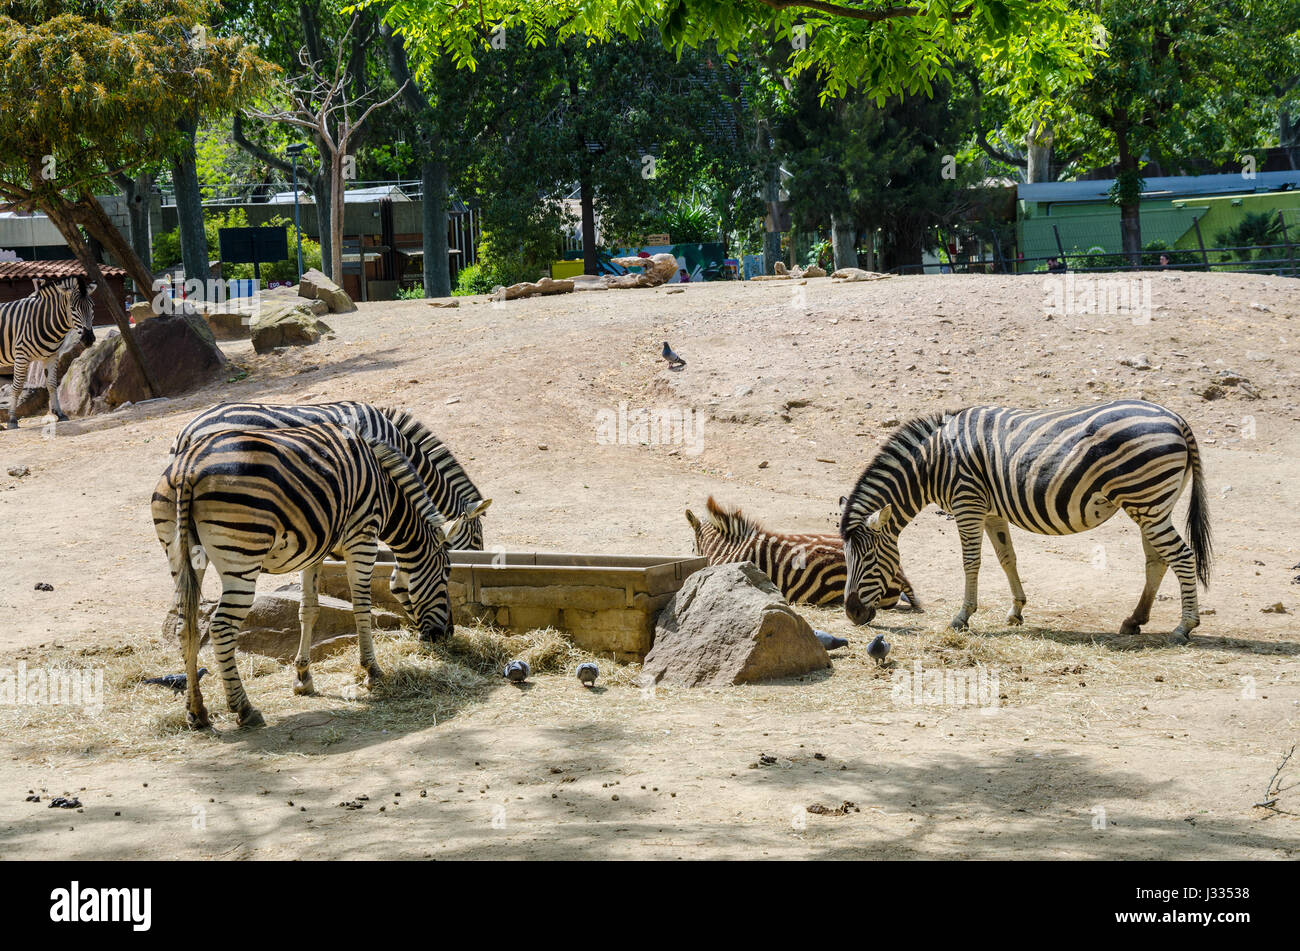 Zoo barcelona fotografías e imágenes alta resolución Alamy